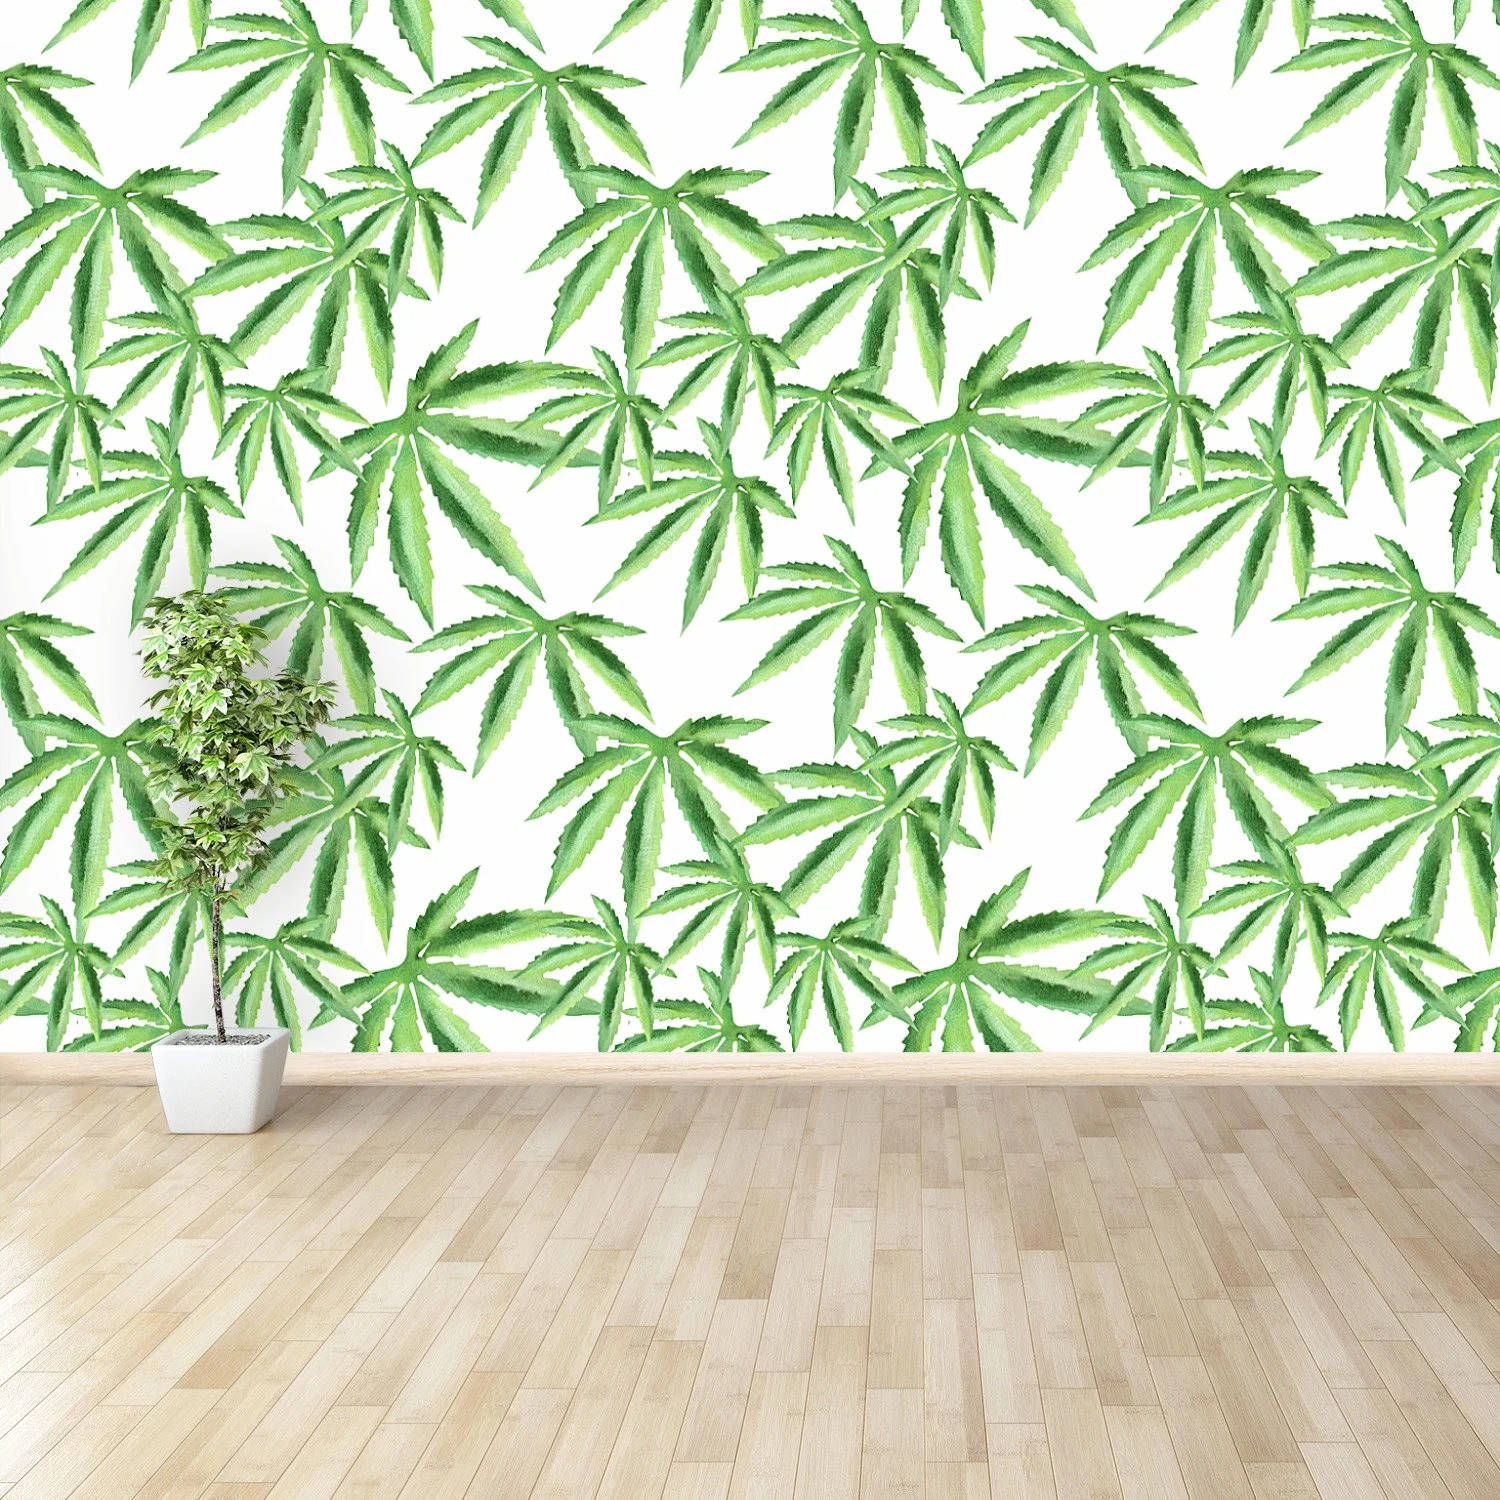 Cool Weed Room